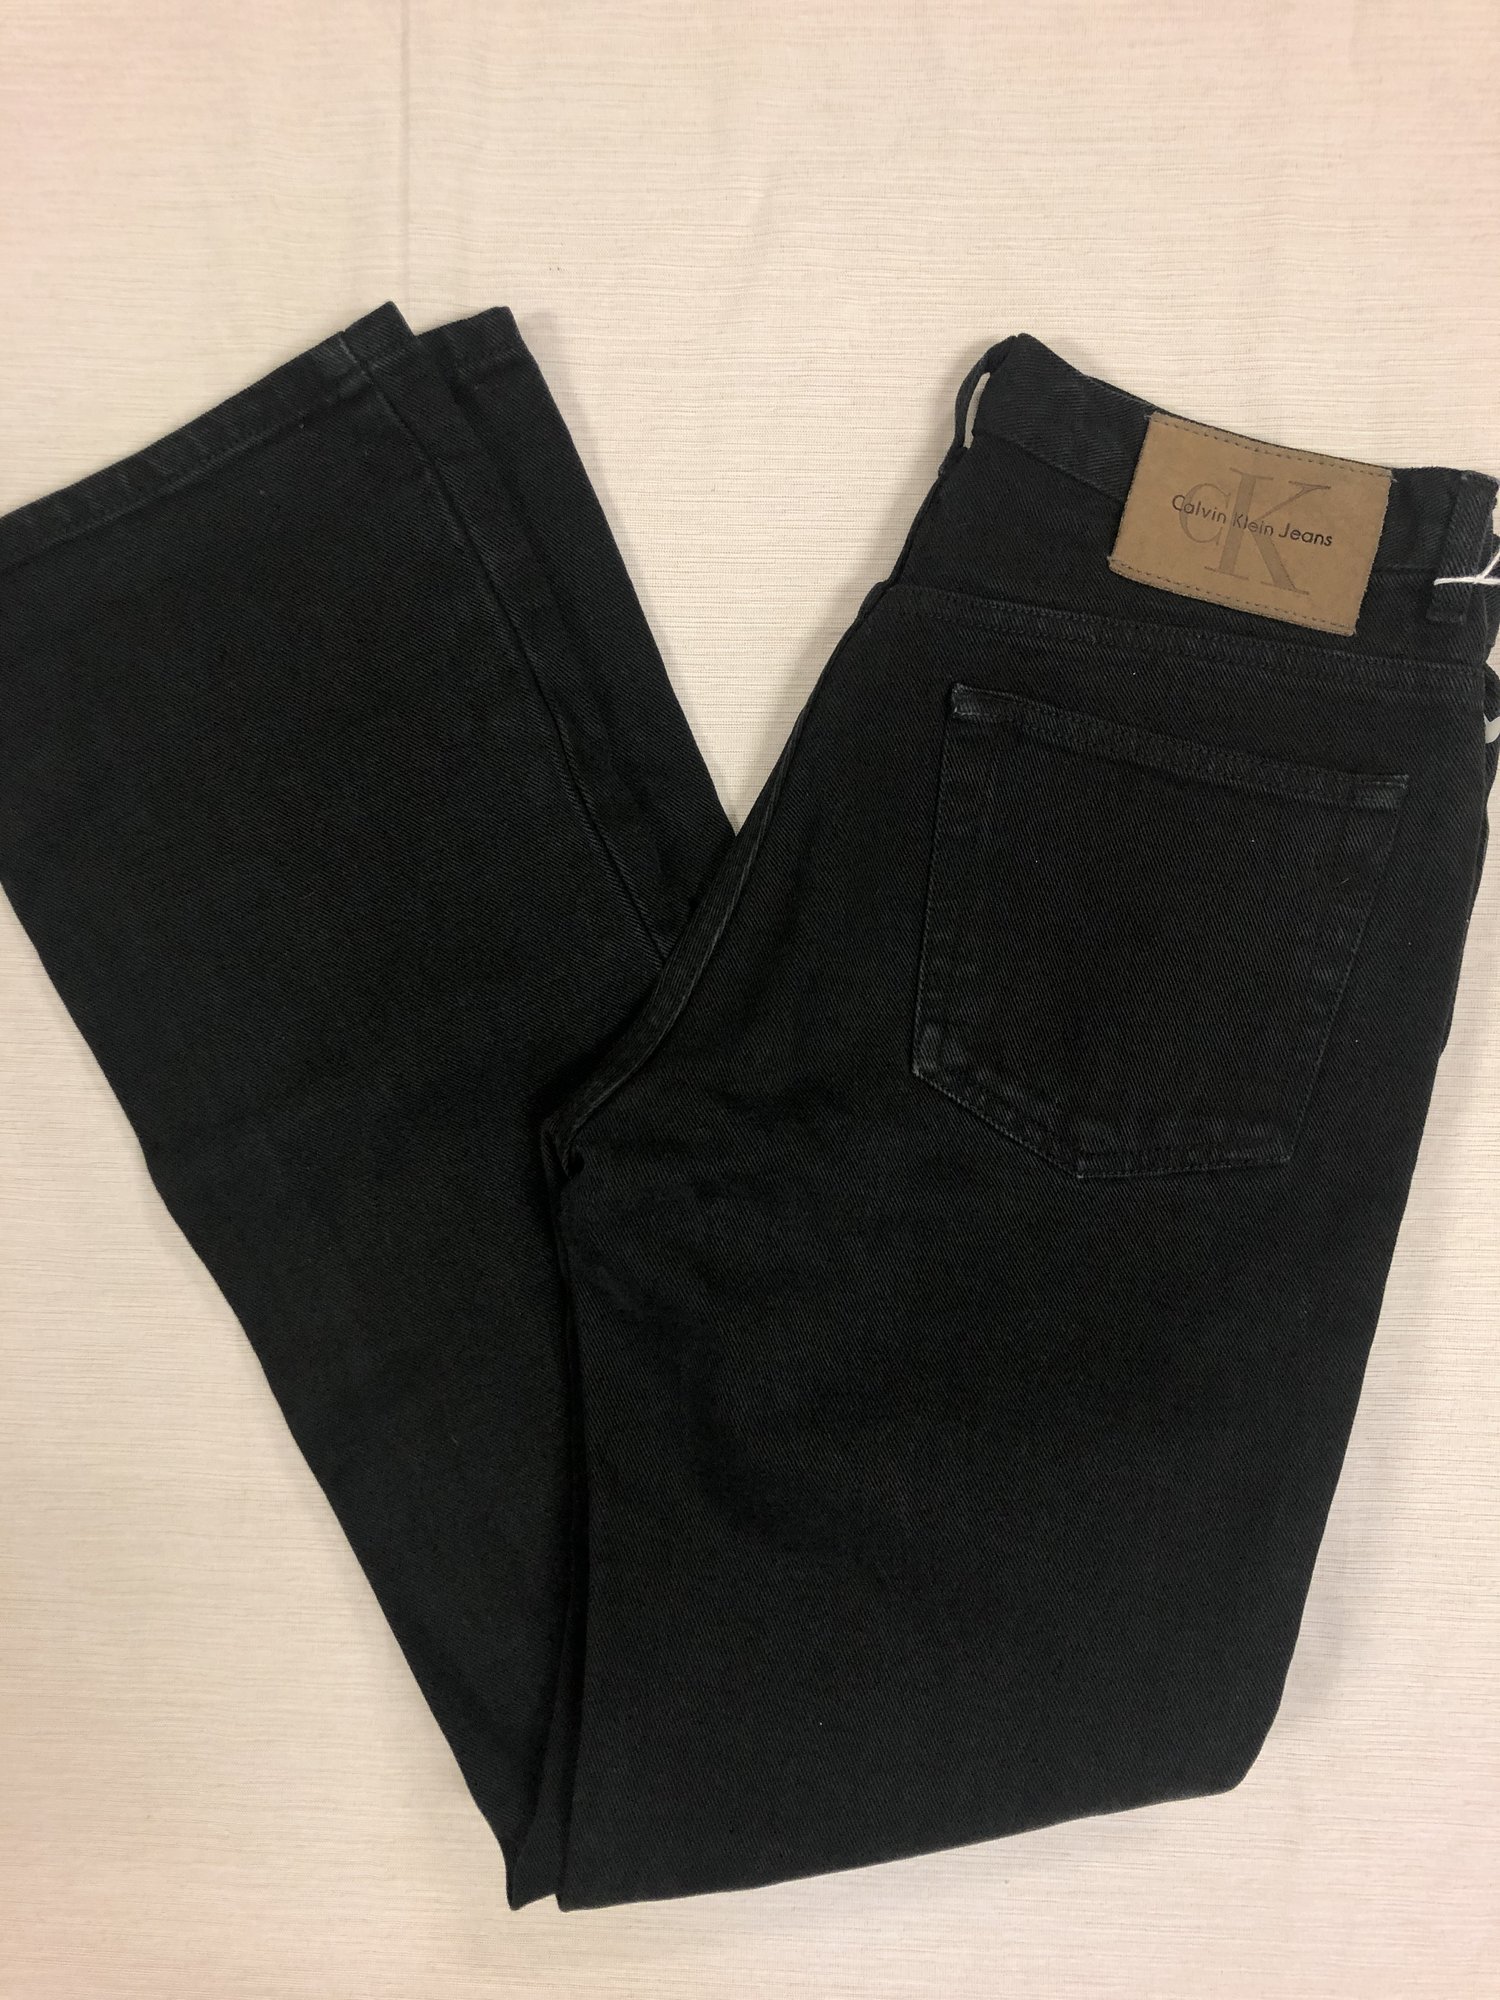 THIRD SISTER VINTAGE Calvin Klein Jeans - Stitched Up